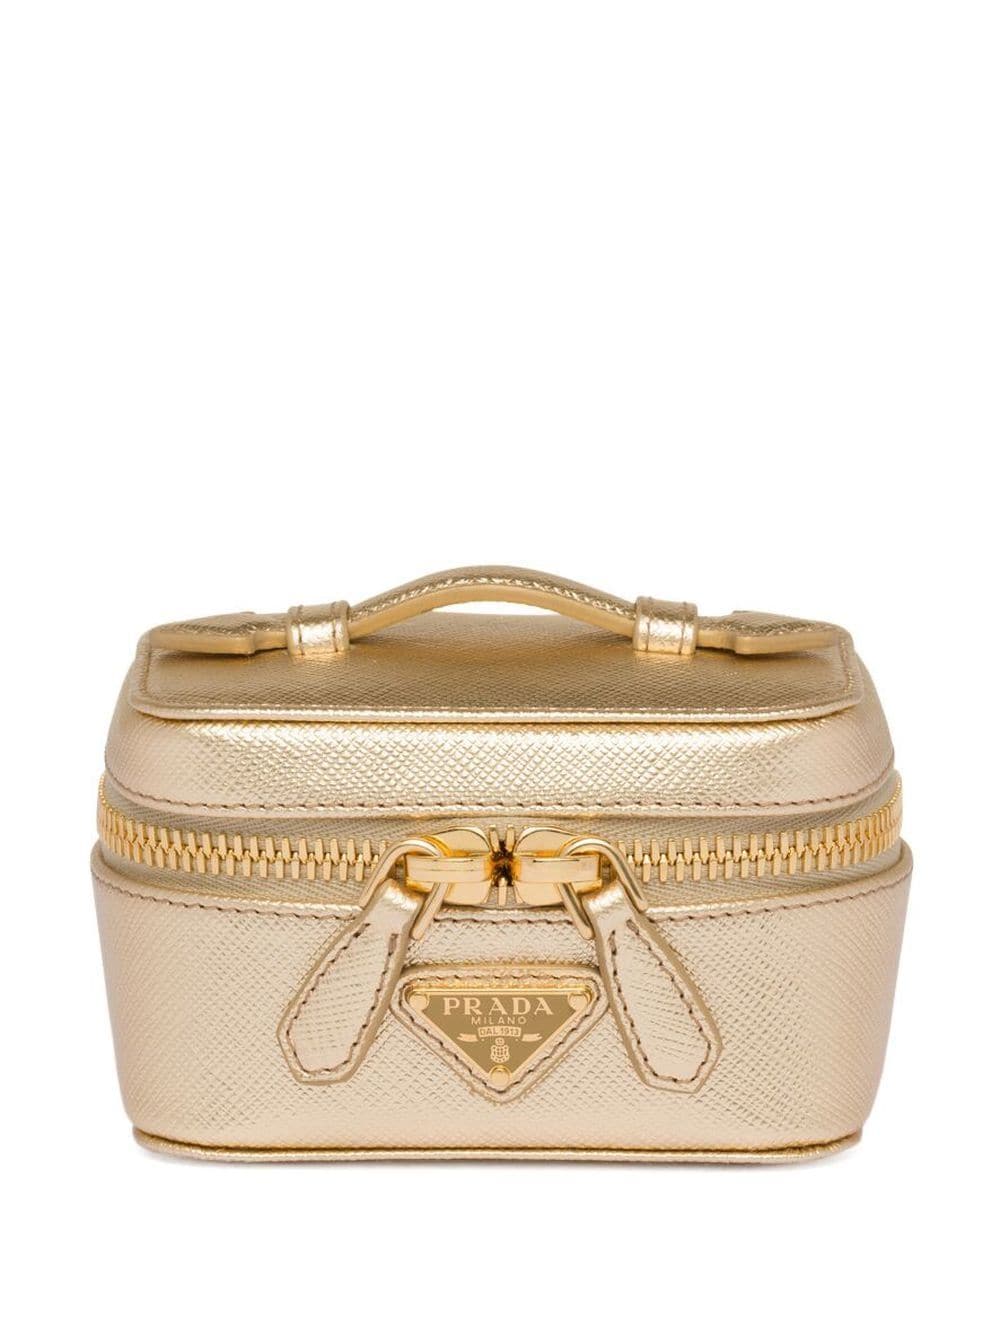 Prada Leather Make-up Bag In Gold